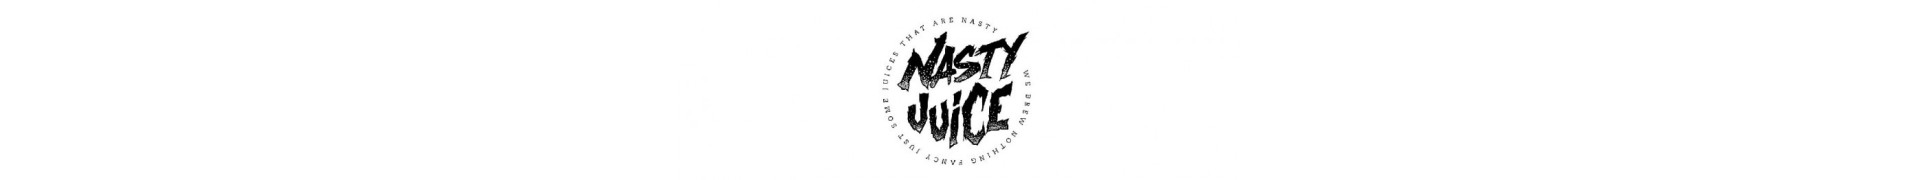 Nasty Juice 